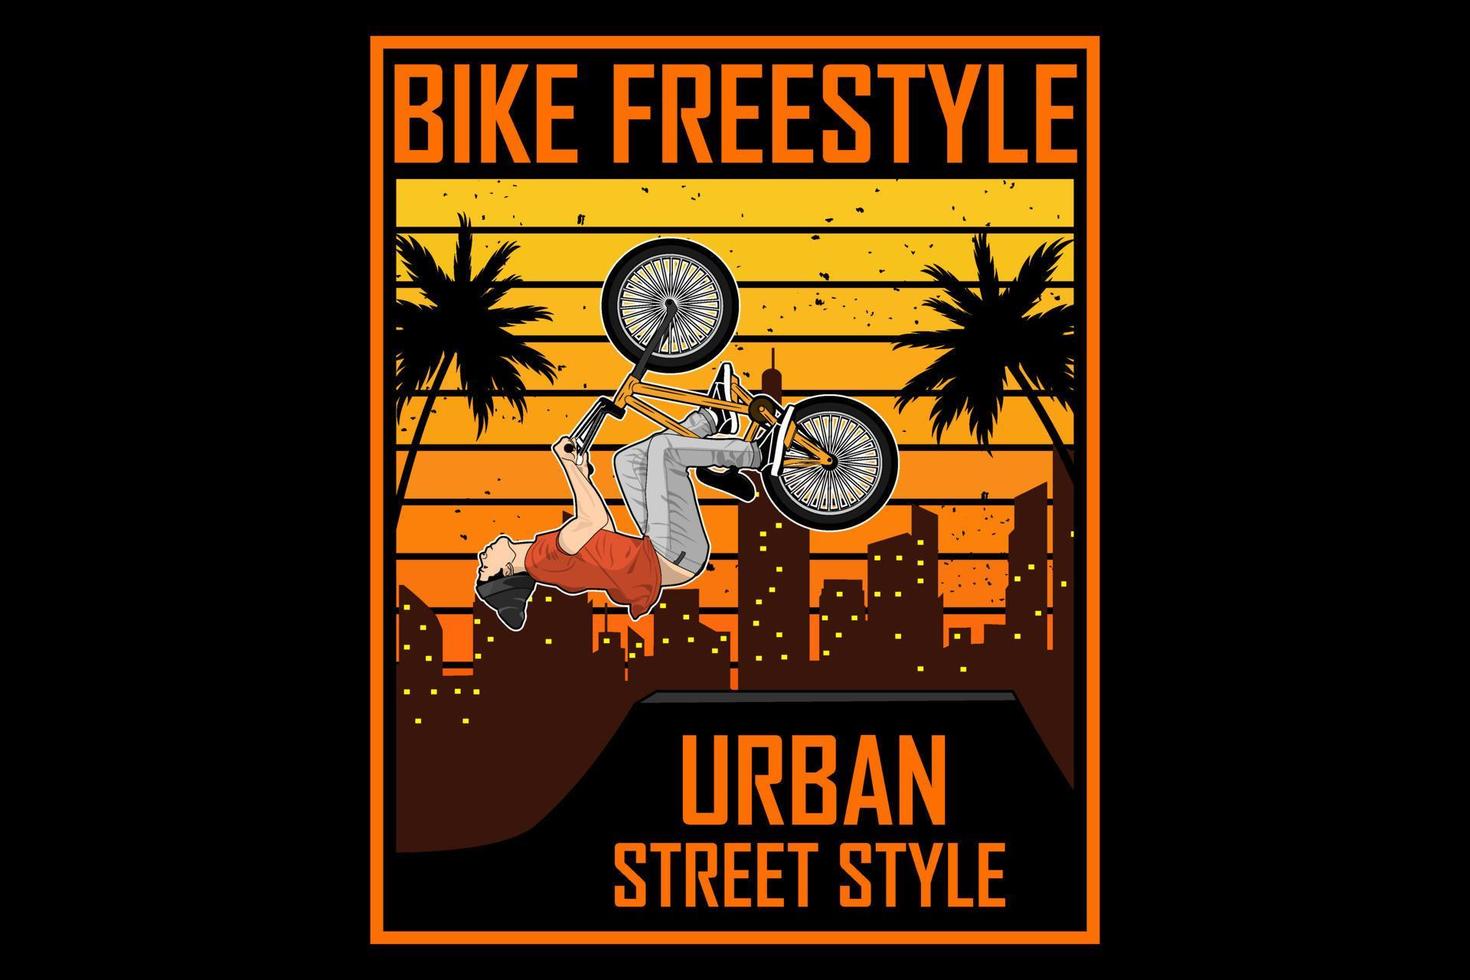 Bike freestyle urban street style design silhouette vintage retro vector